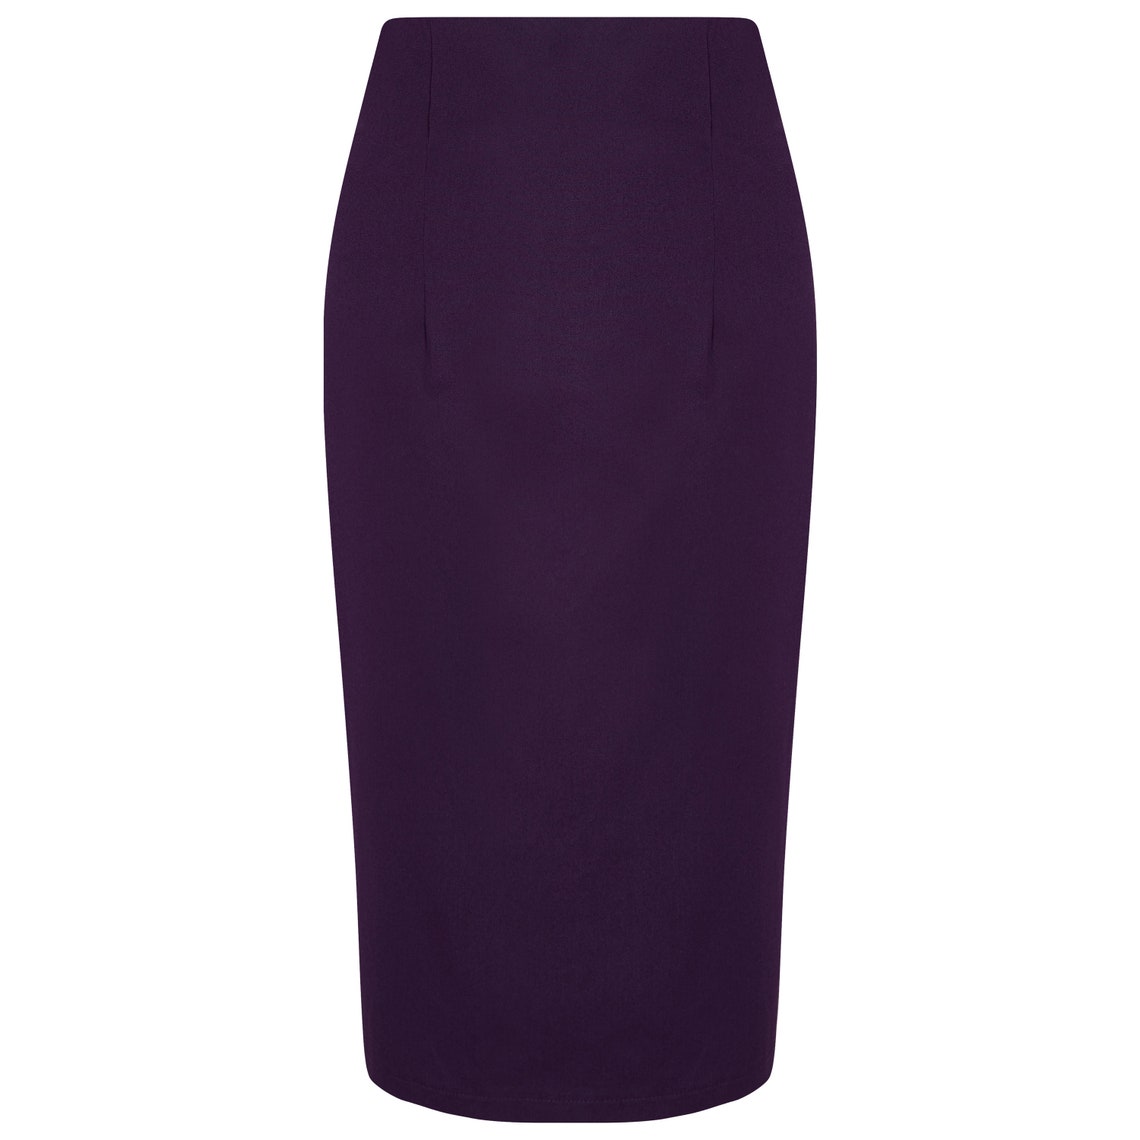 Cotton Purple Women's Pencil Skirt UK 8 only | Etsy